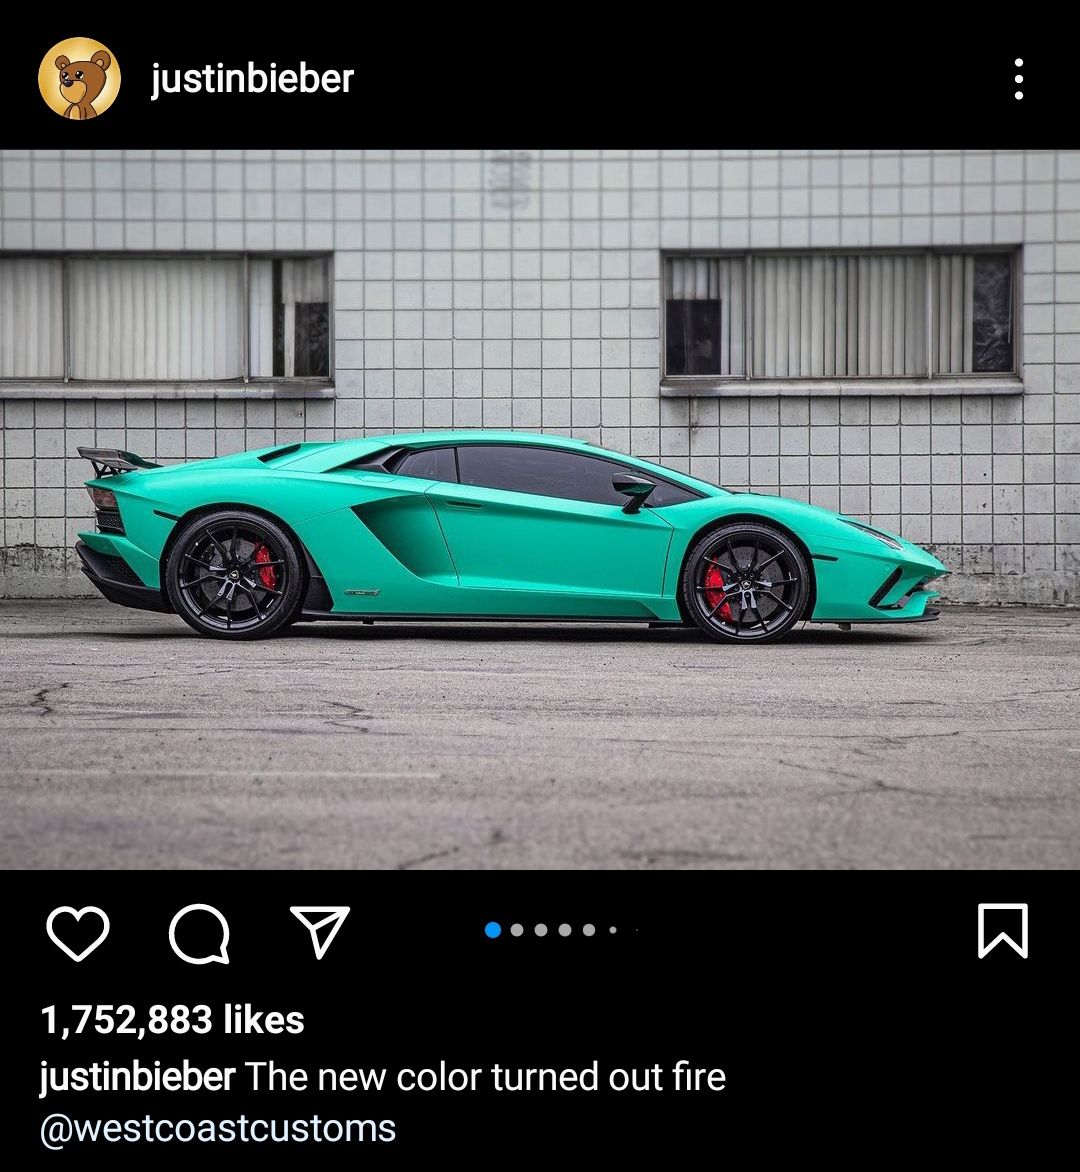 Justin Bieber's Post on Instagram.